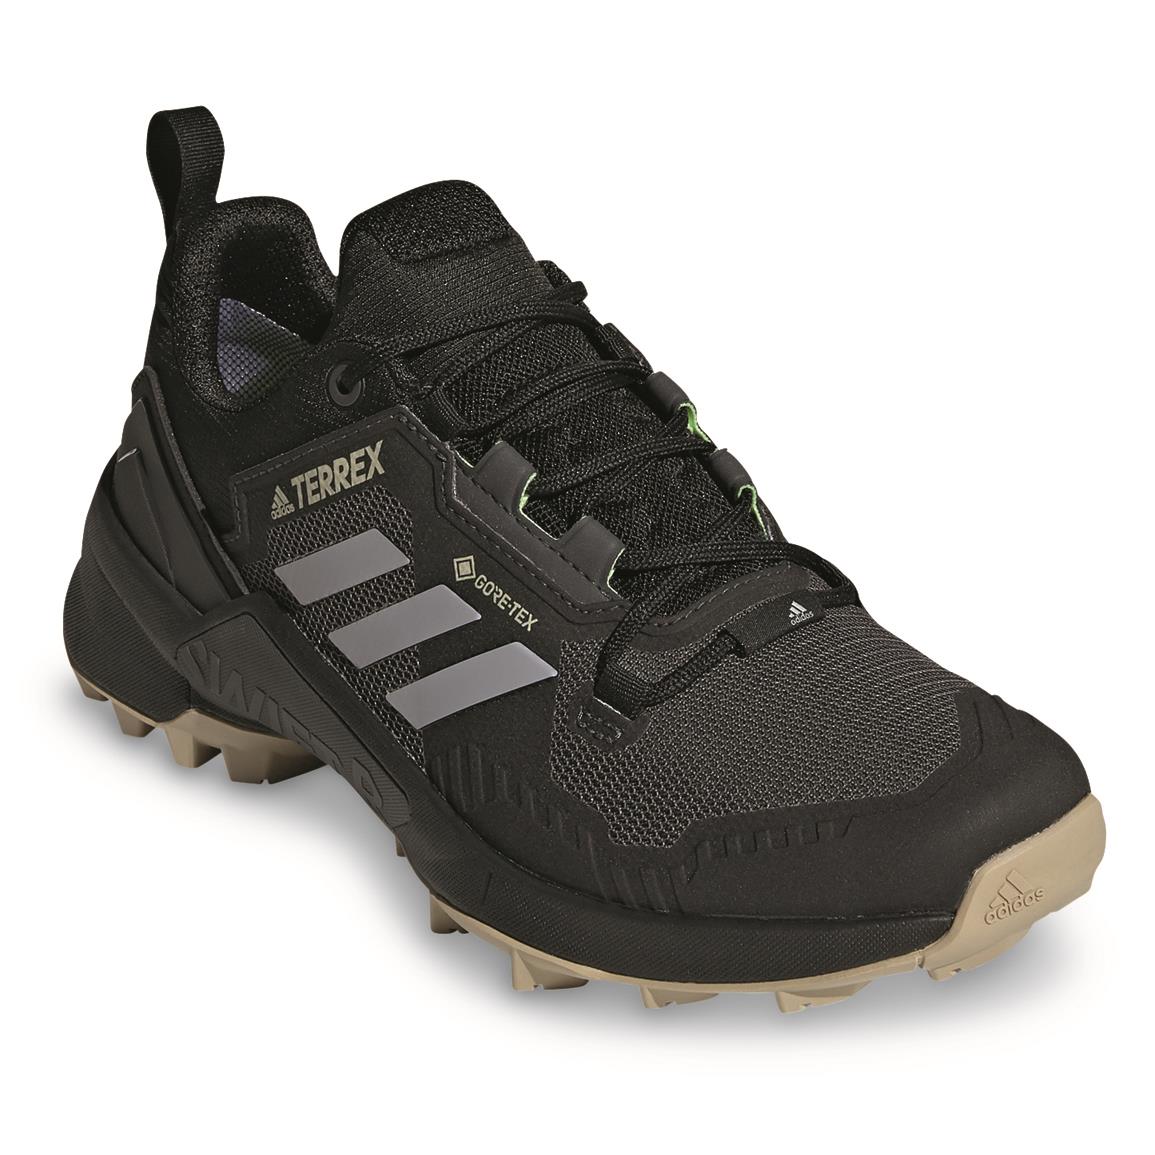 Adidas Women's Terrex Swift R3 GTX Waterproof Hiking Shoes, GORE-TEX, Core Black/halo Silver/dgh Solid Grey